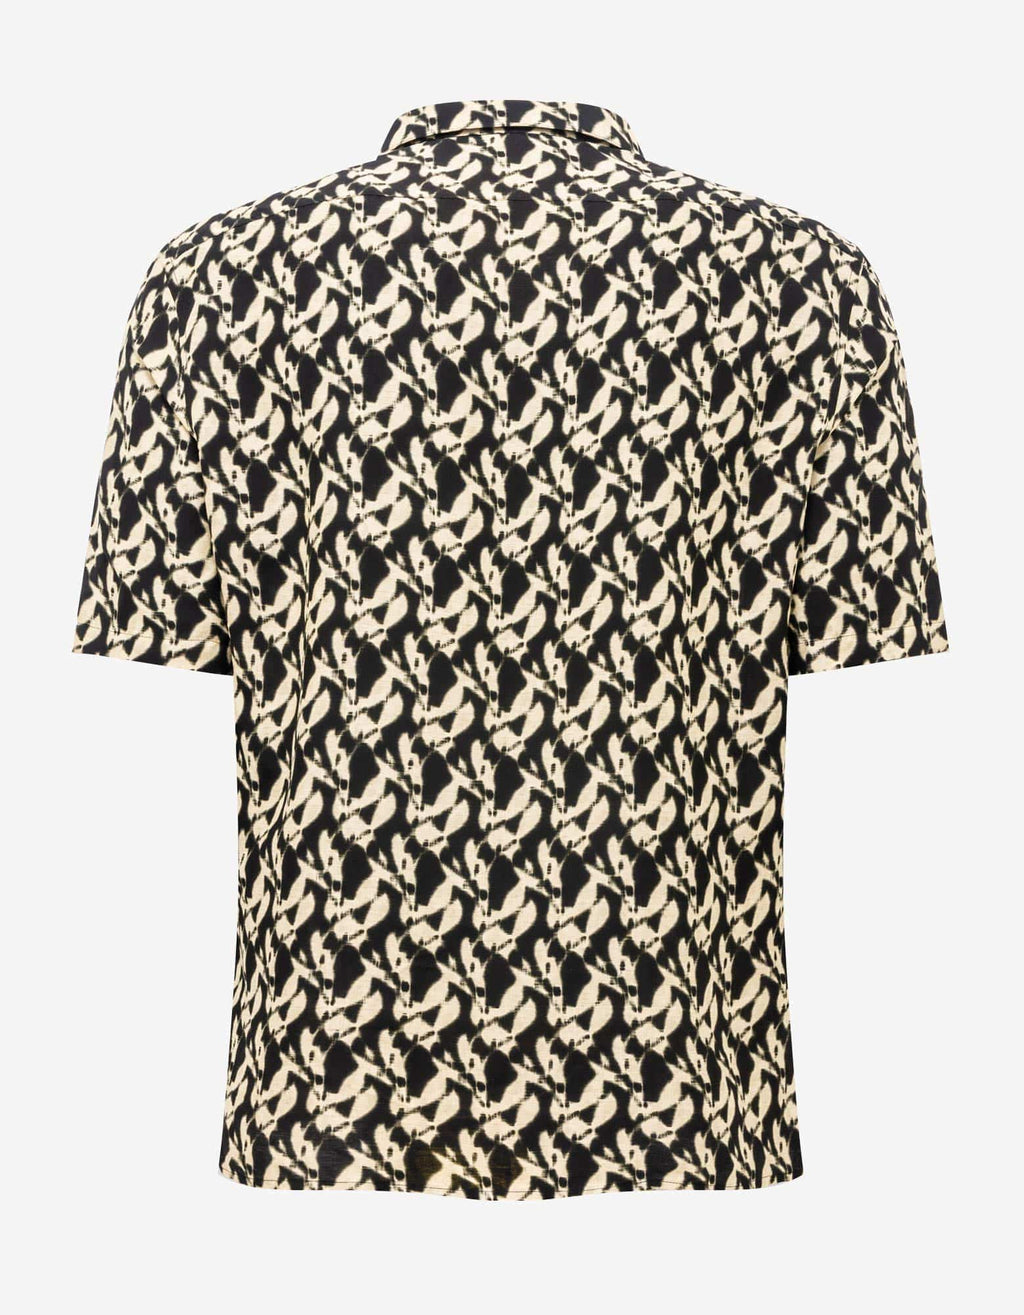 Saint Laurent Black & Beige Print Shirt